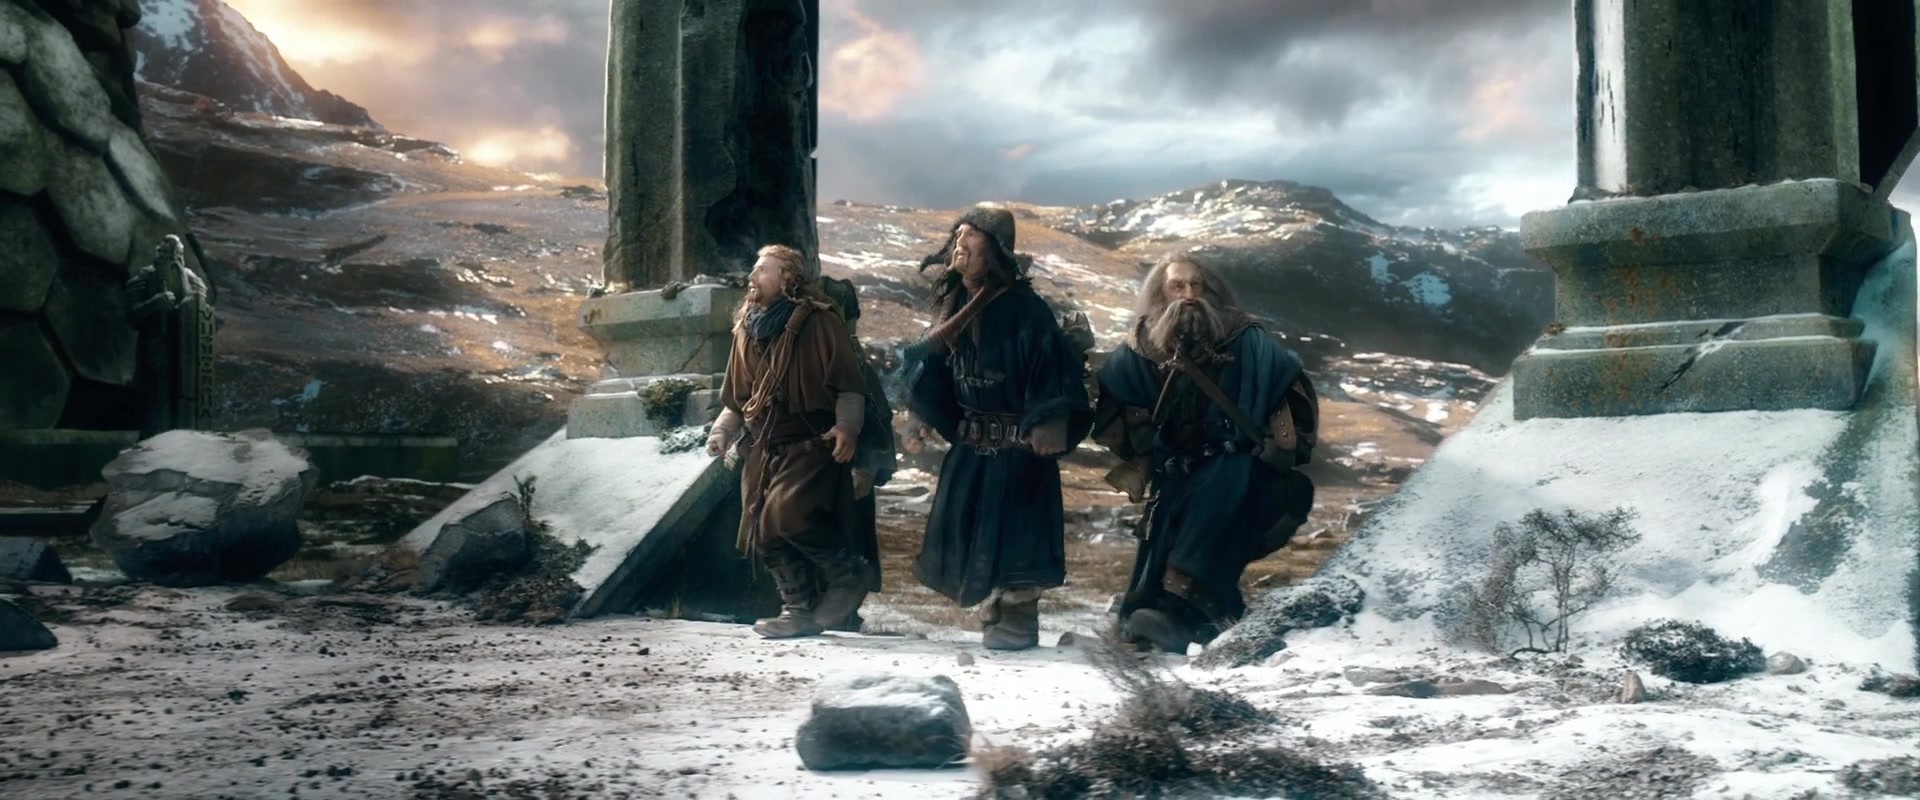 Битва пяти воинств. The Hobbit: the Battle of the Five Armies, 2014. Хоббит битва пяти воинств Фродо. Иэн холм Хоббит битва пяти воинств. Битва пяти воинств Хоббит 1977.